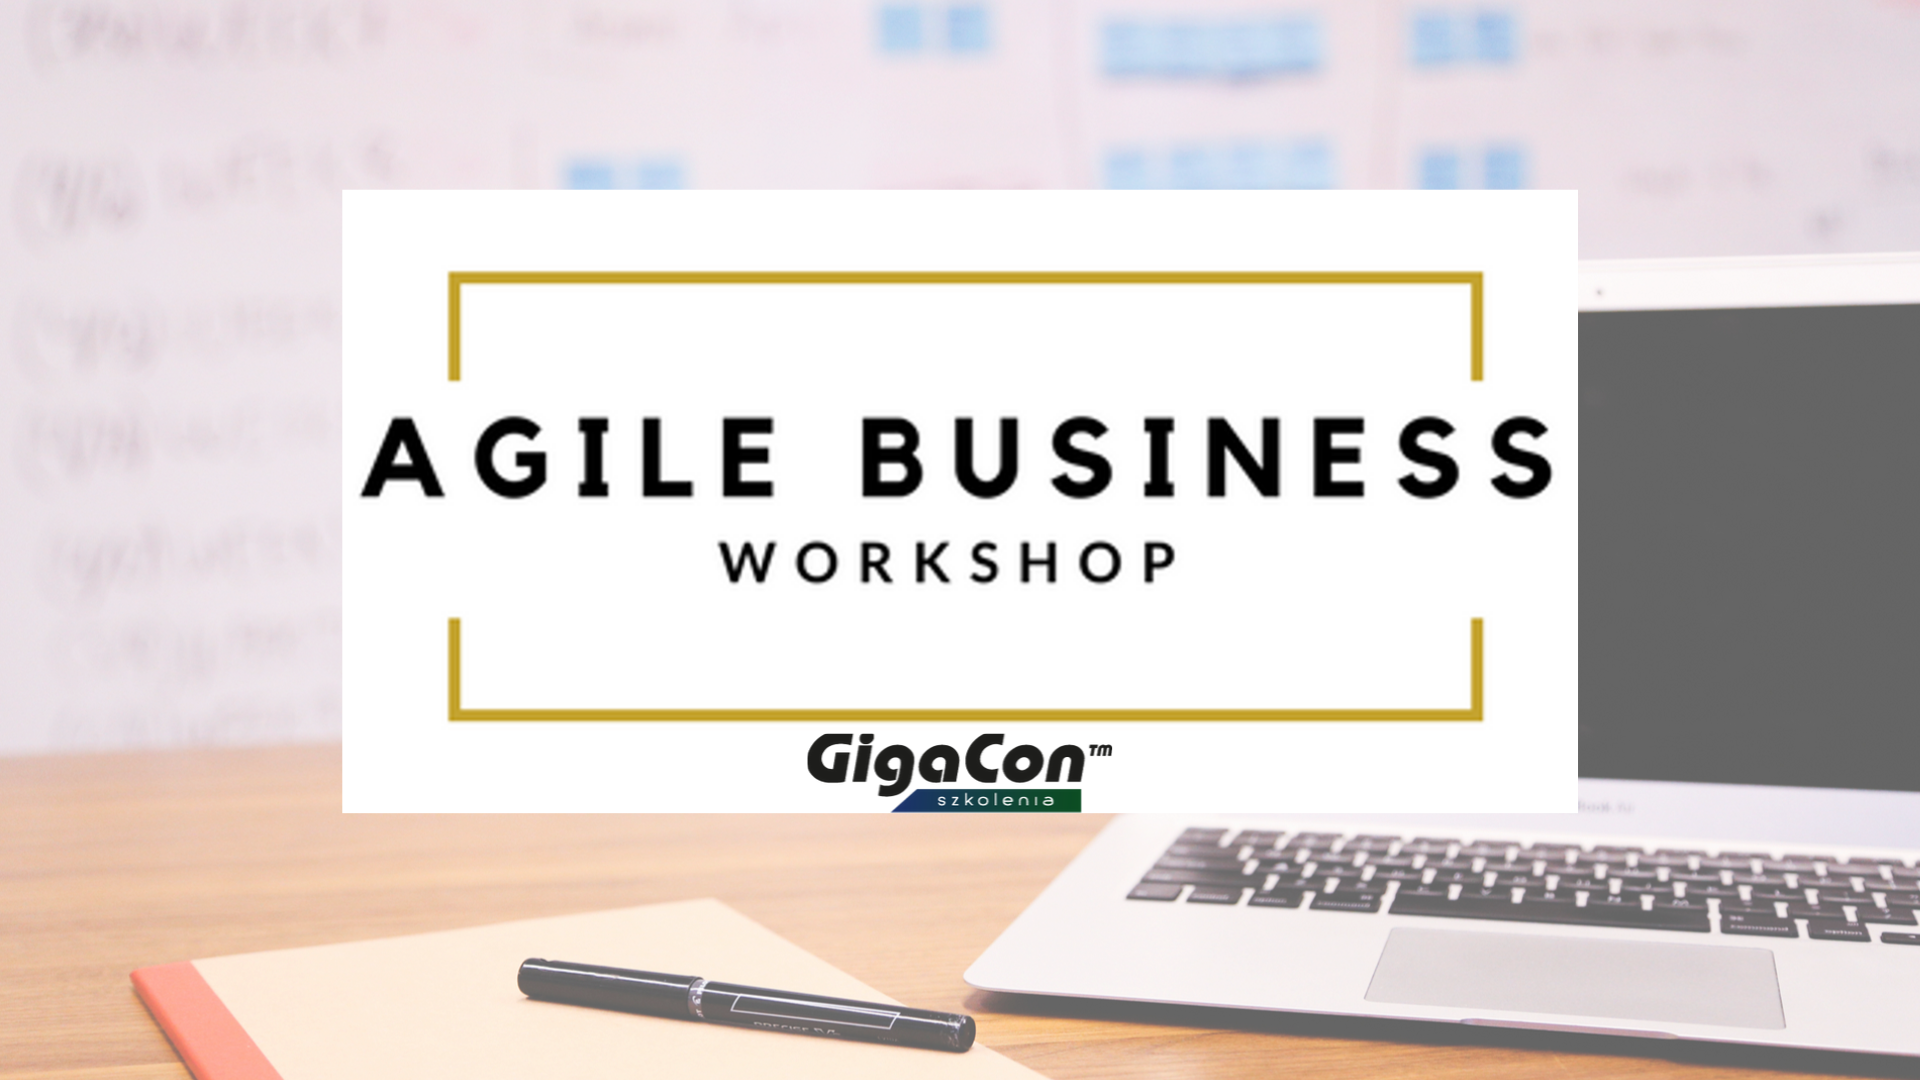 gigacon-agile-business-workshop-listopad-2019